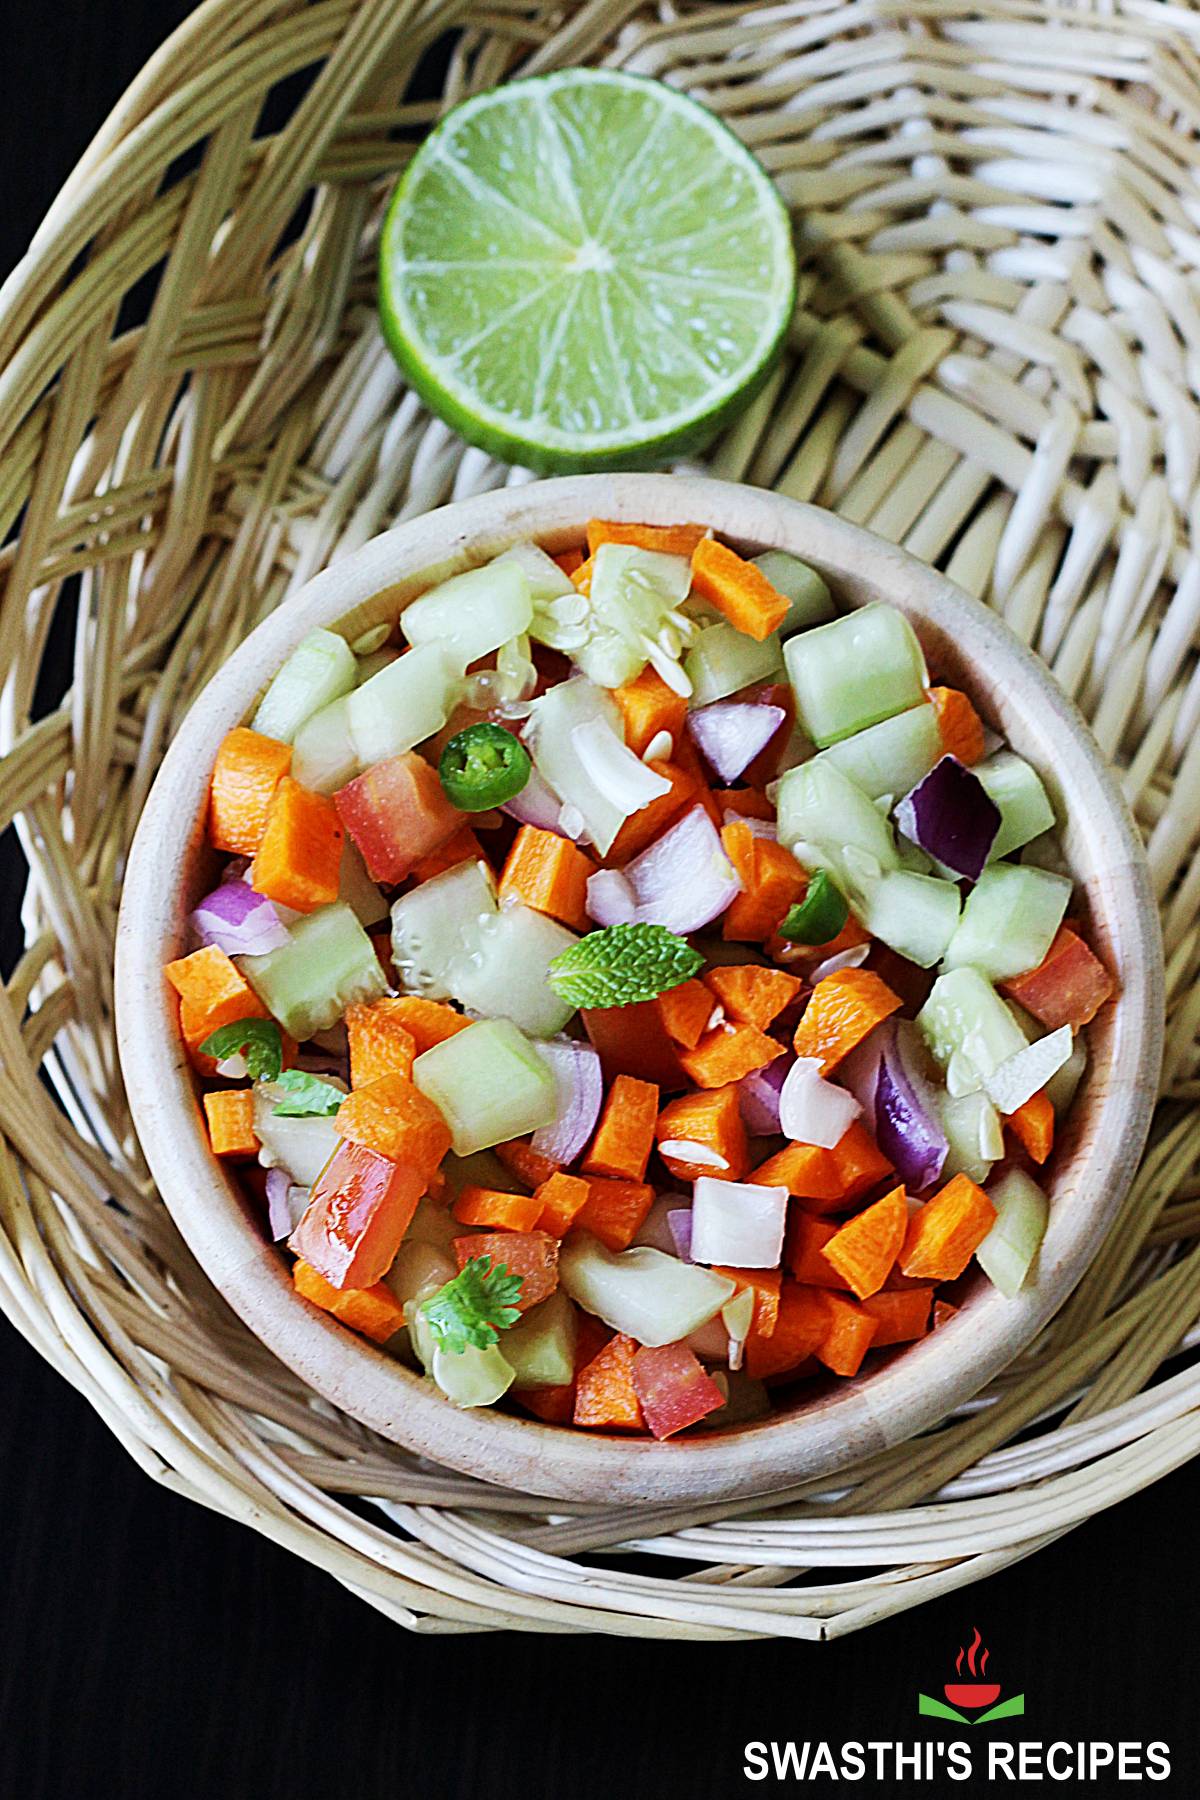 Vegetable Salad Recipe   Swasthi s Recipes - 84